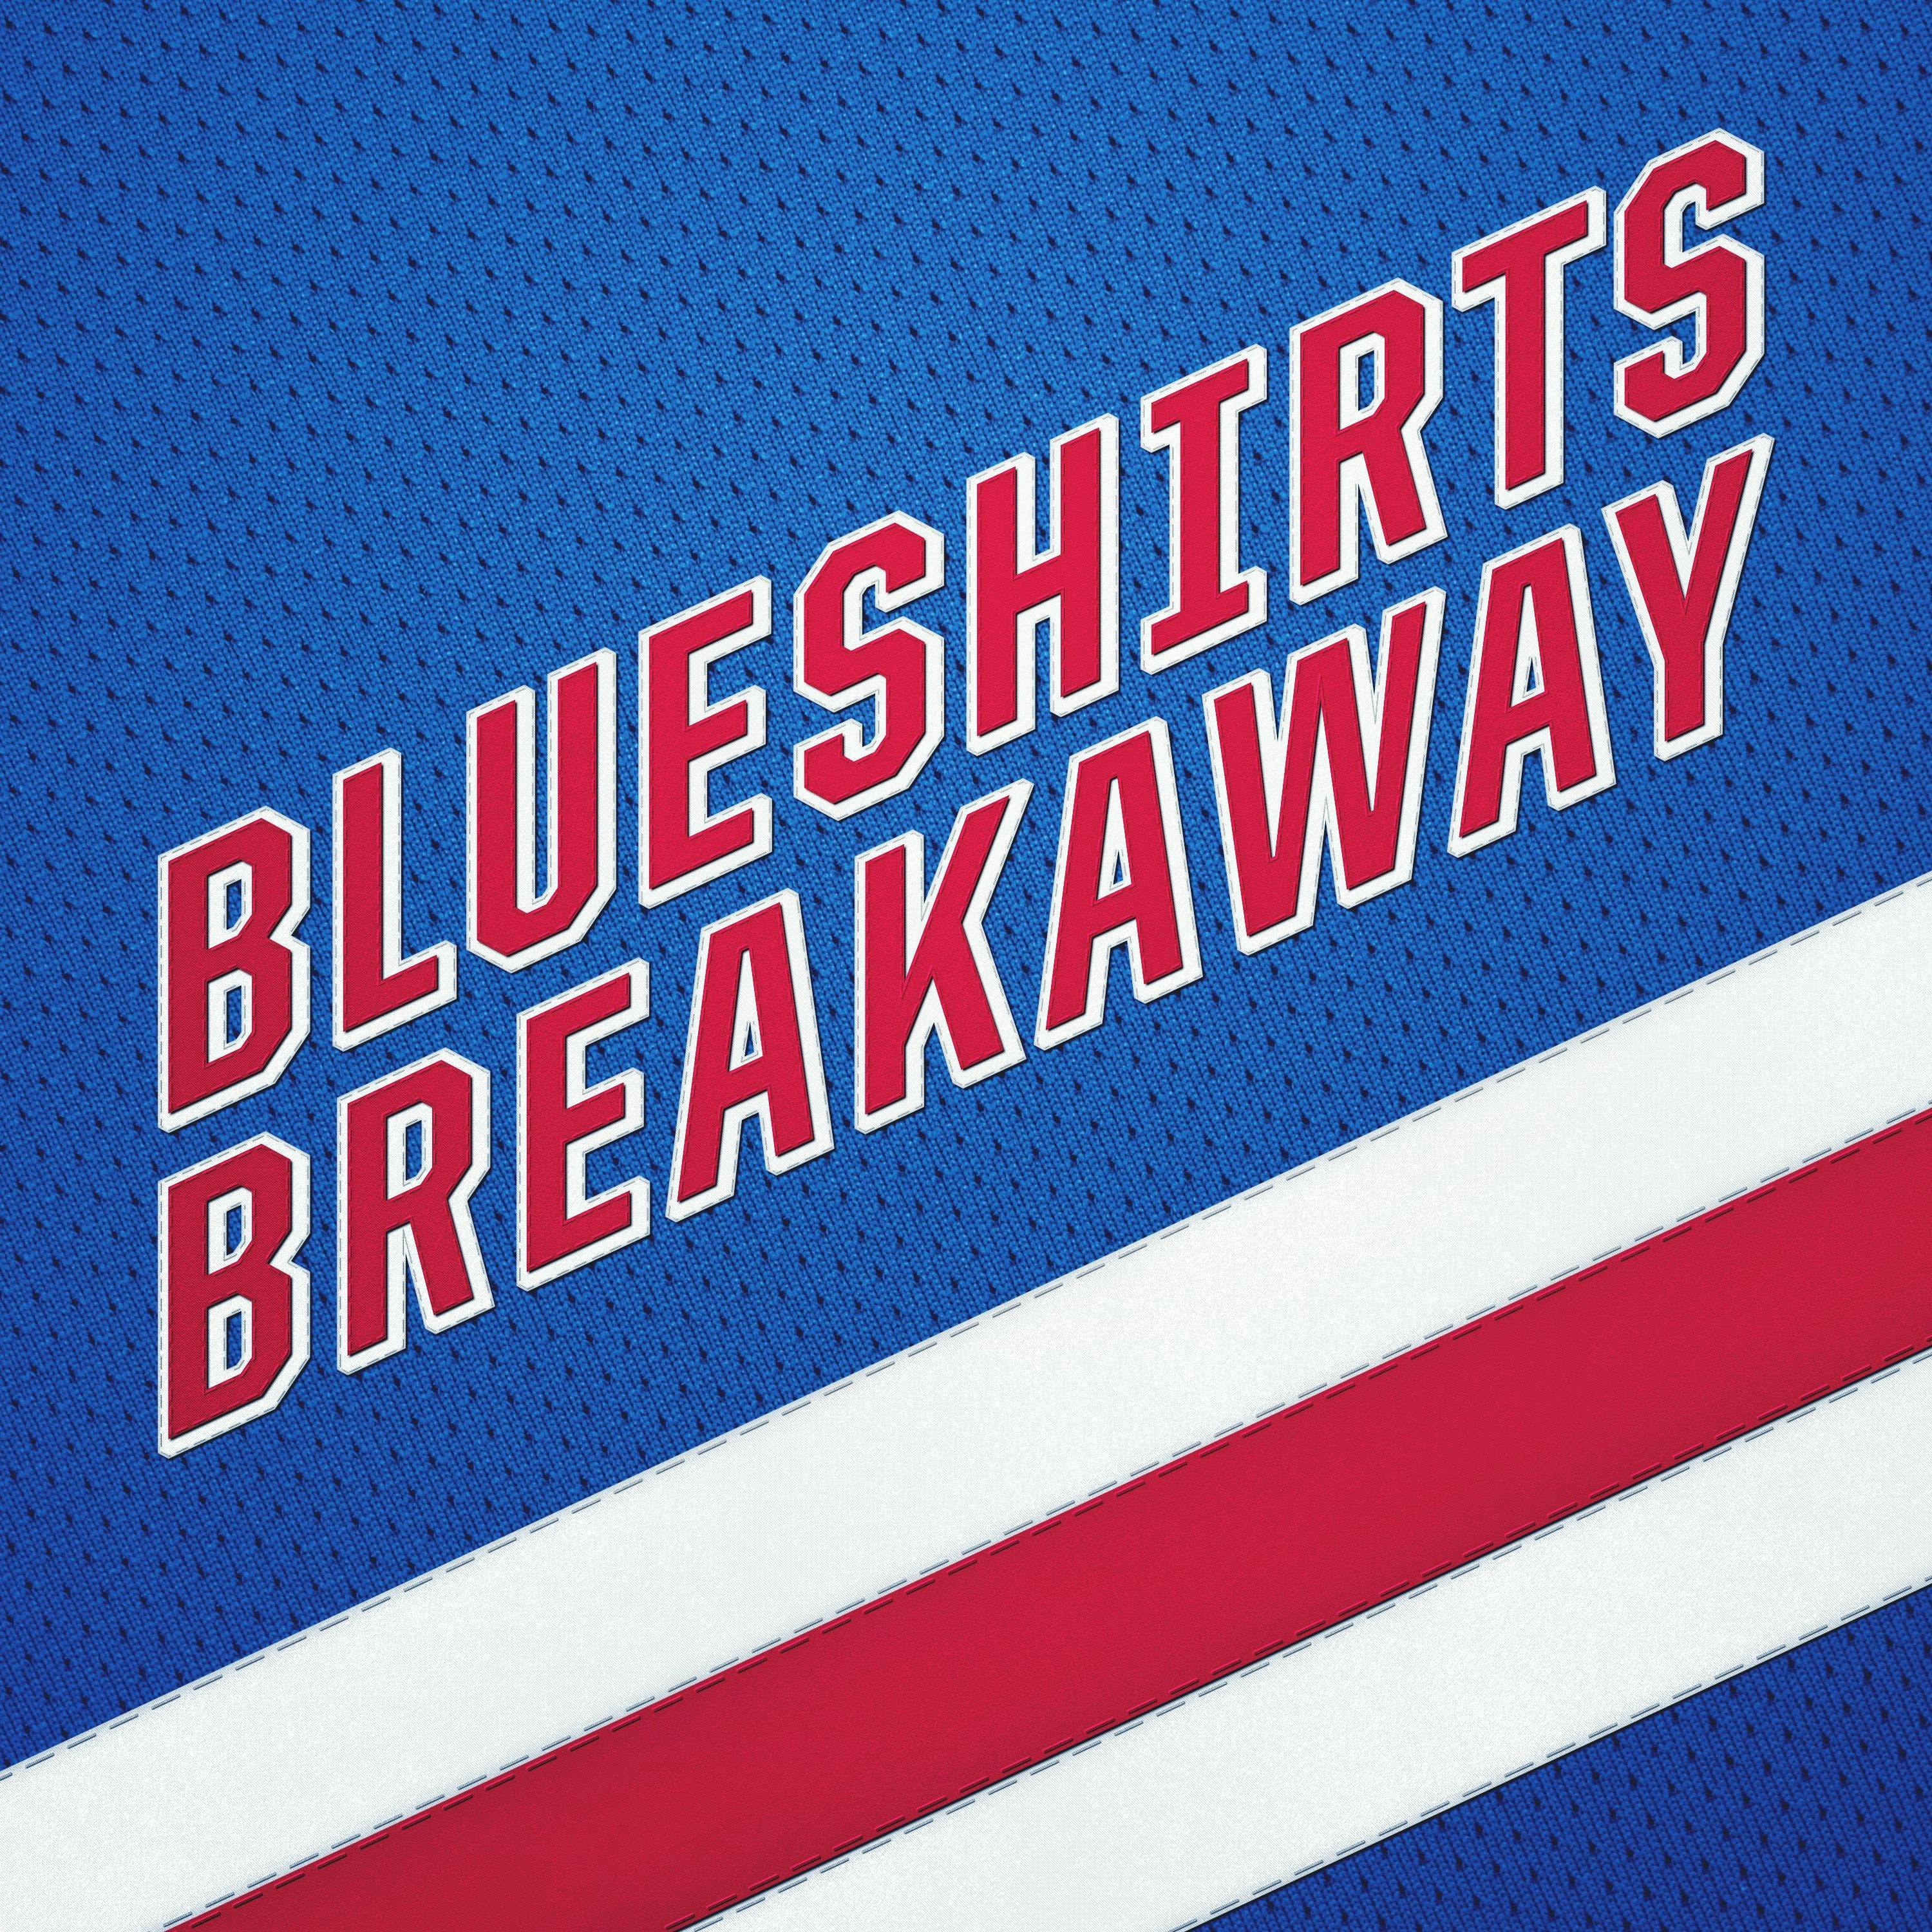 Blueshirts Breakaway Bonus - World Cup Preview